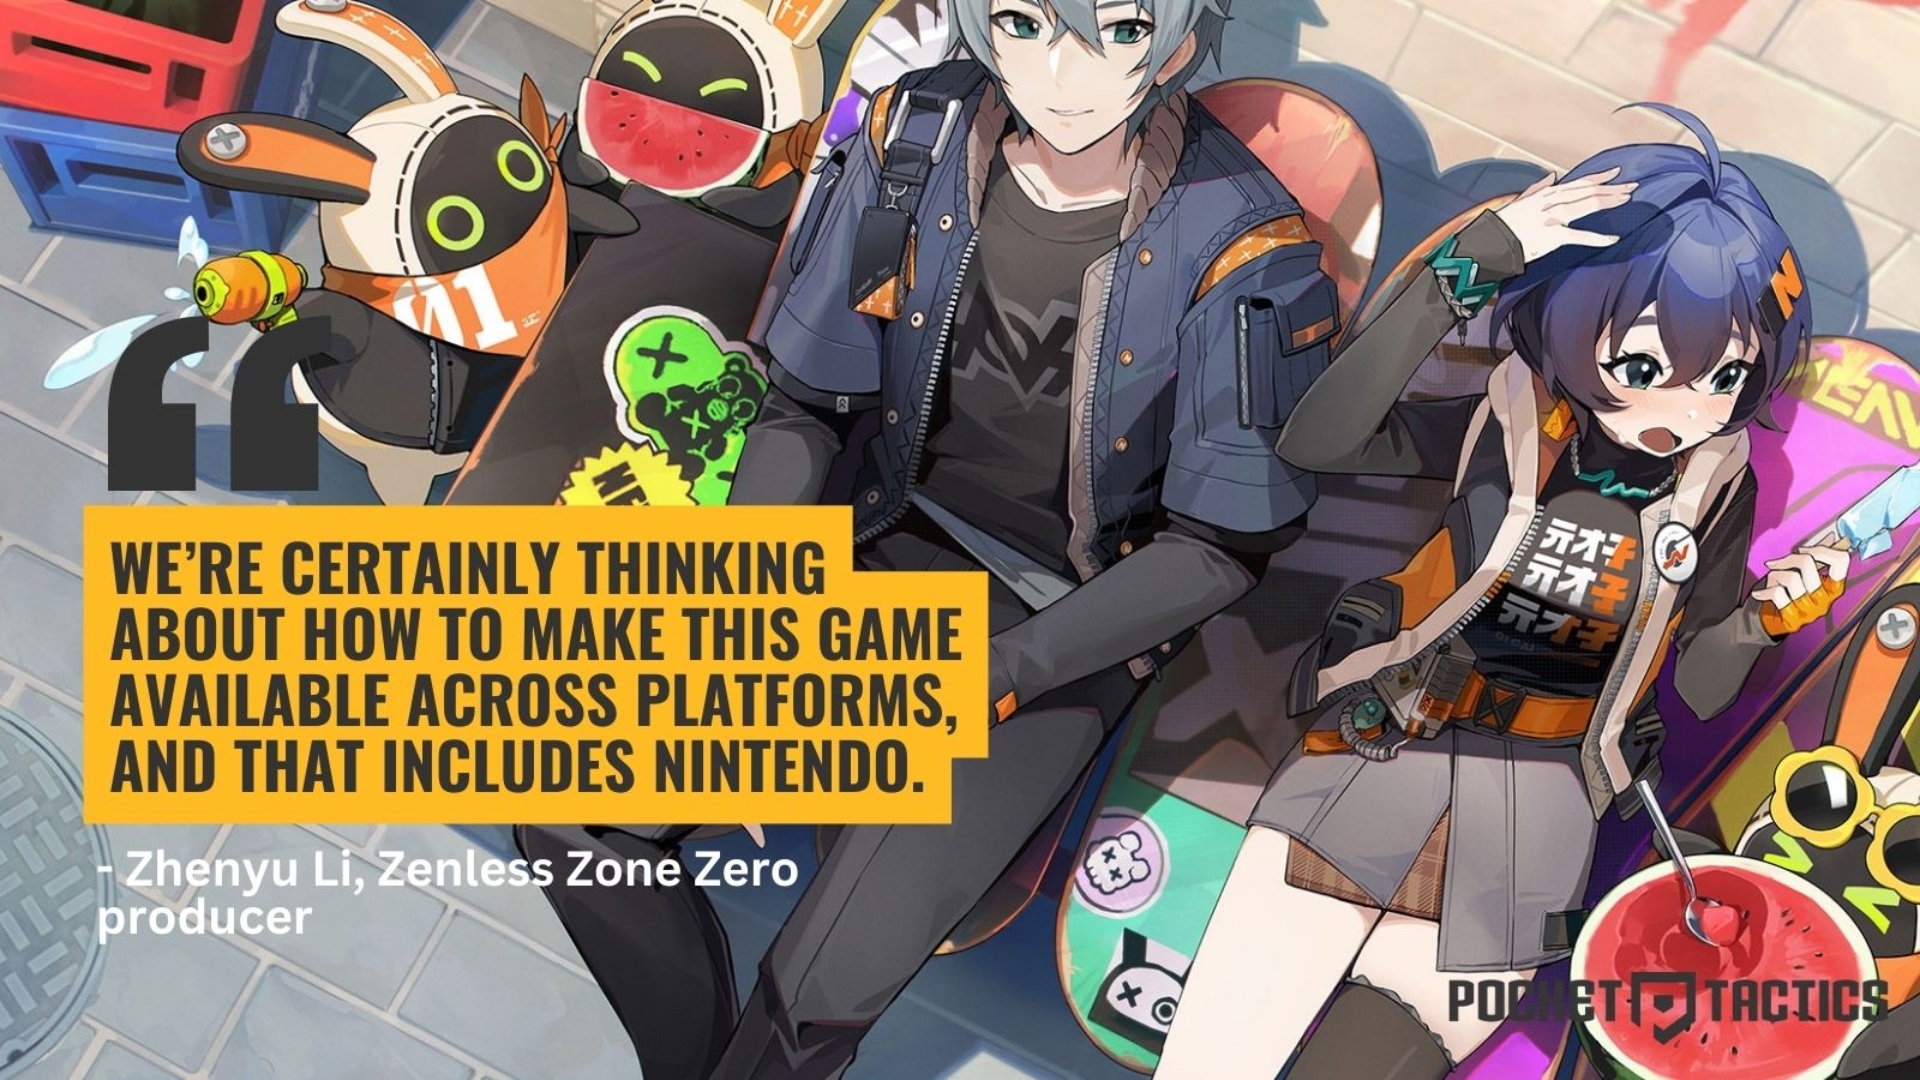 Zenless Zone Zero is the next effort by developers of Genshin